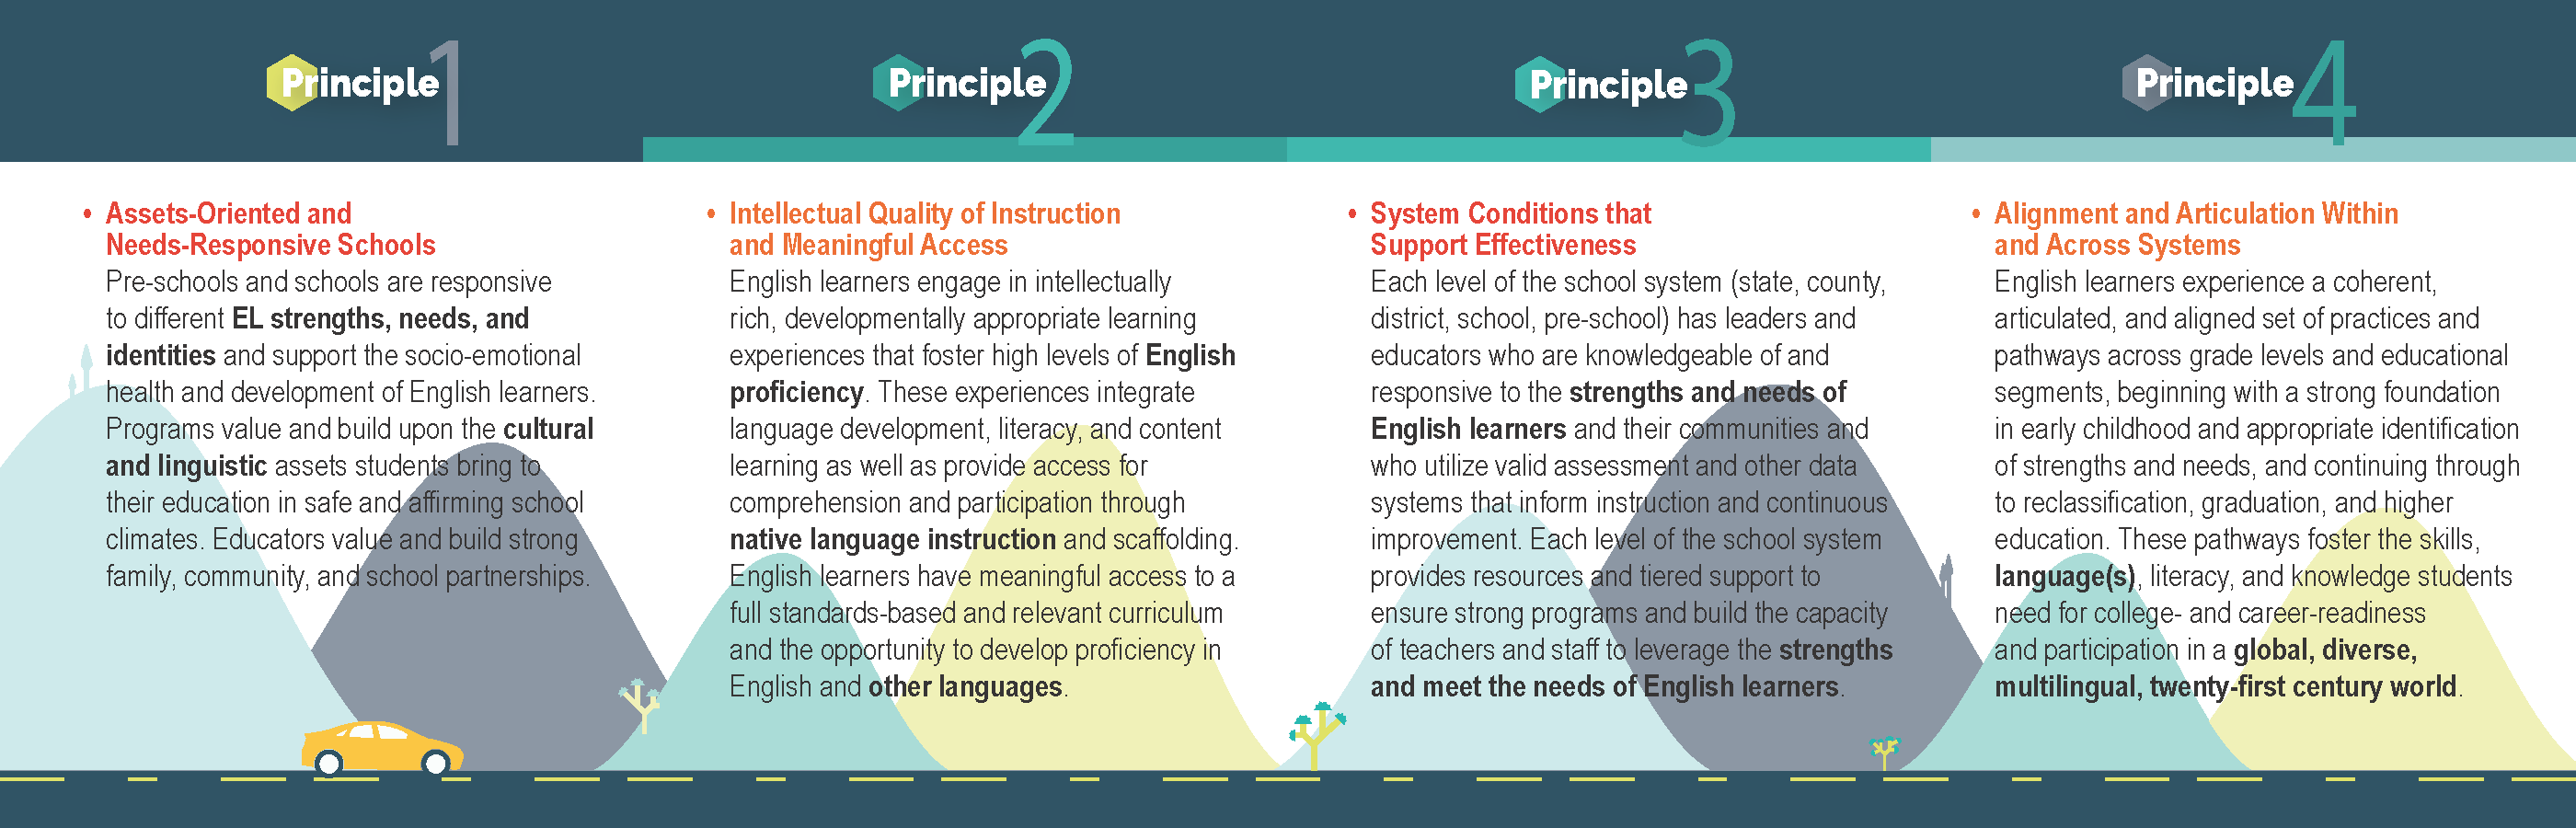 EL Roadmap Principles Image